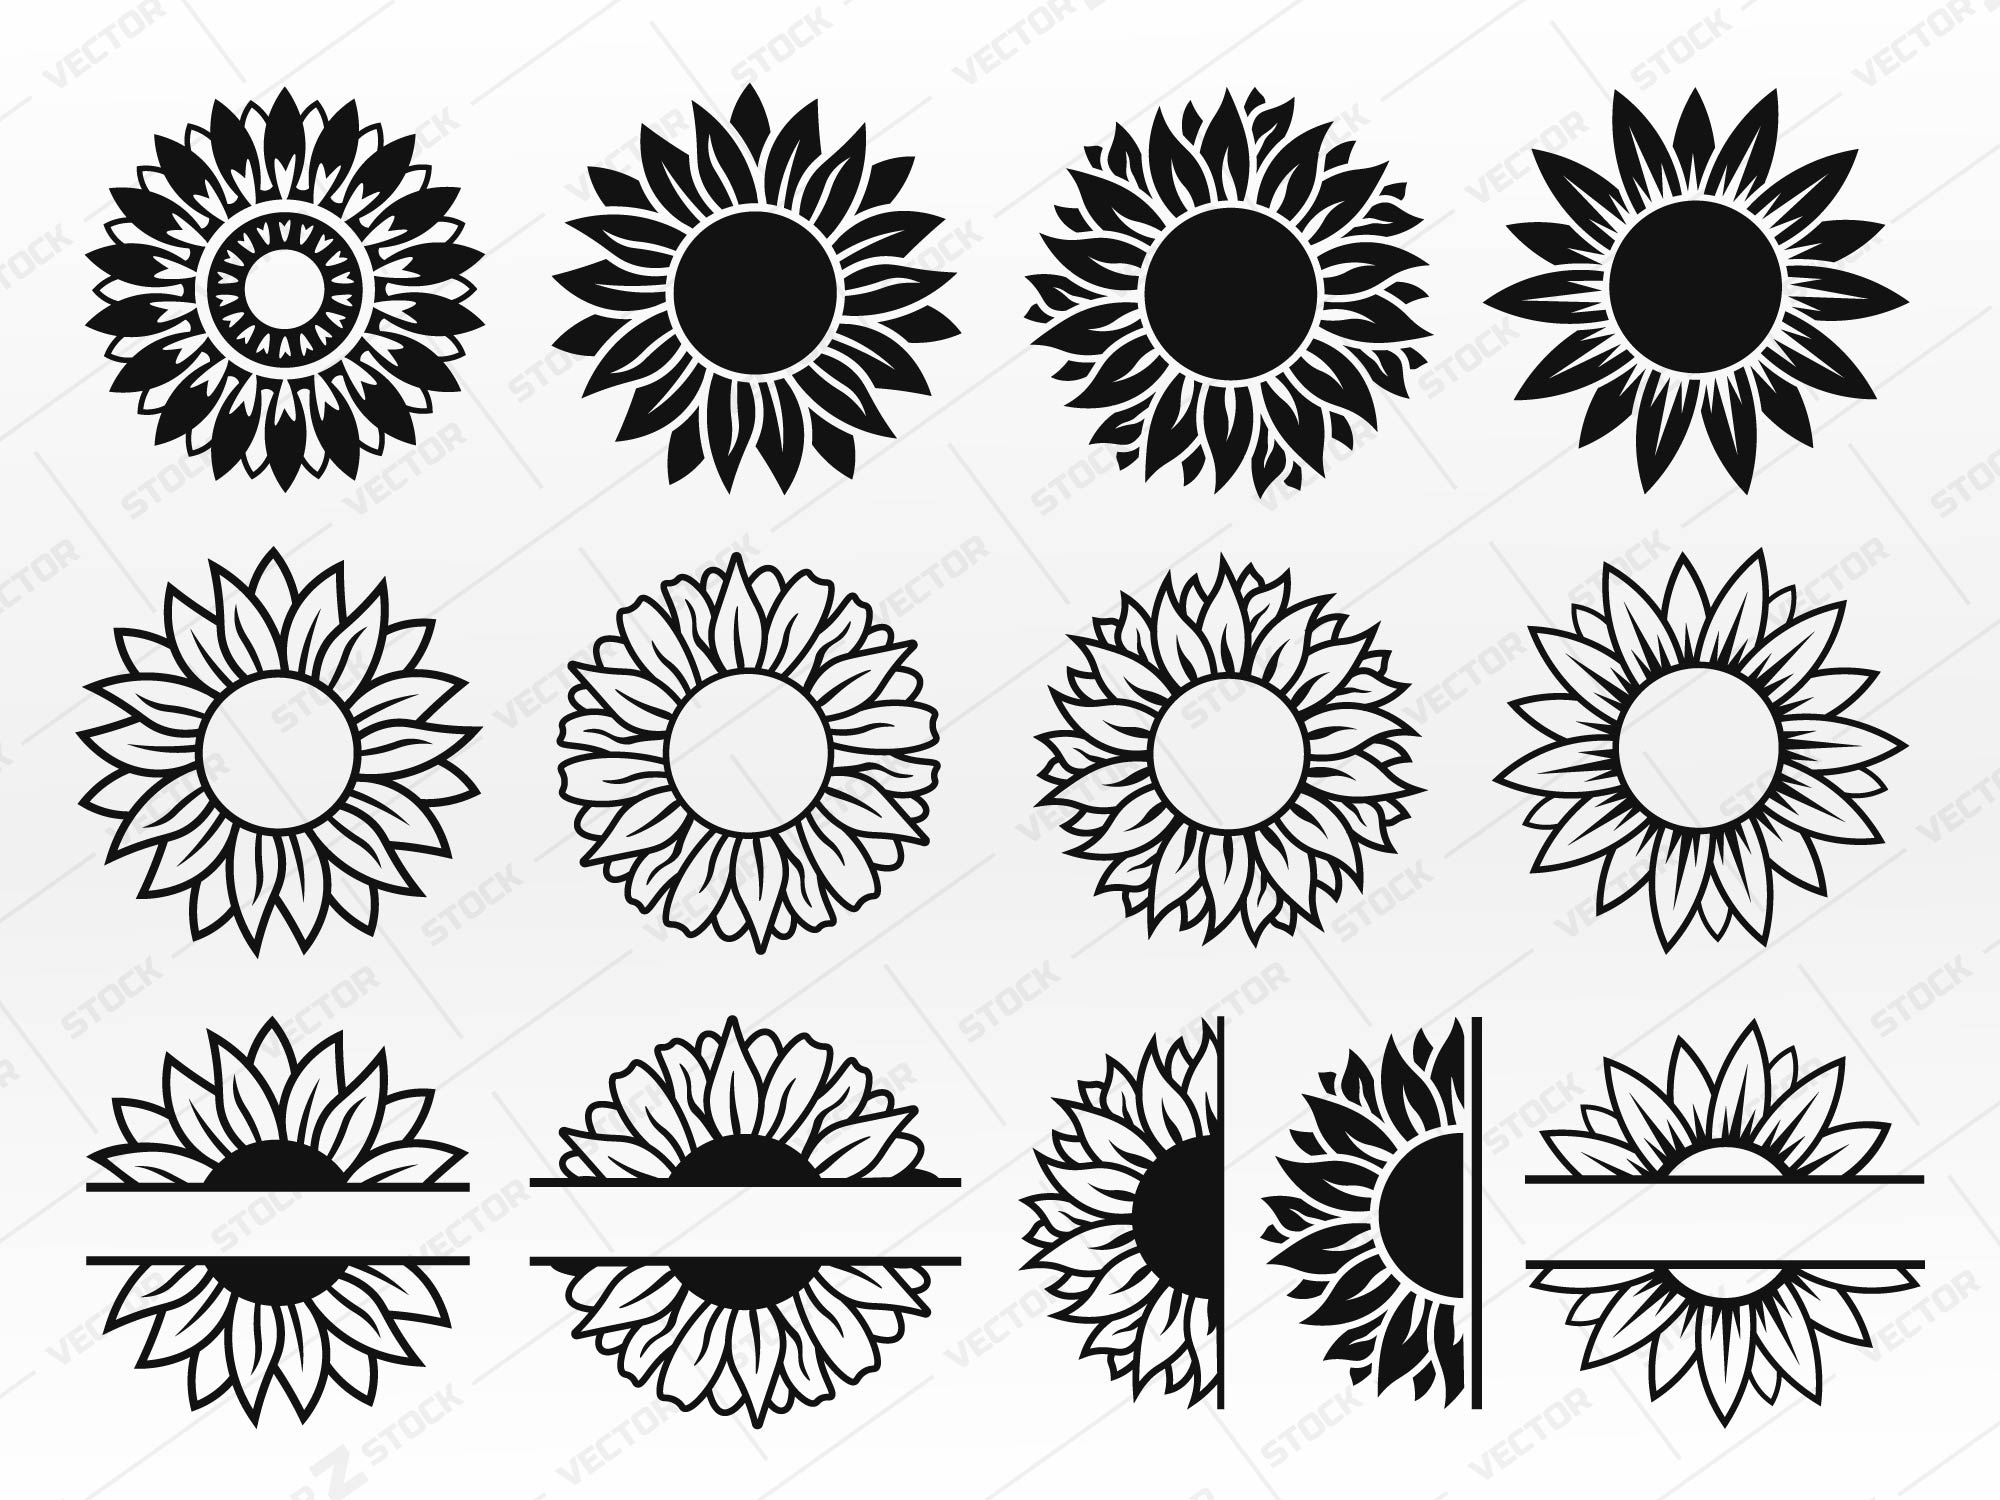 Sunflower SVG Vector Silhouettes, Flower SVG, Sunflower SVG